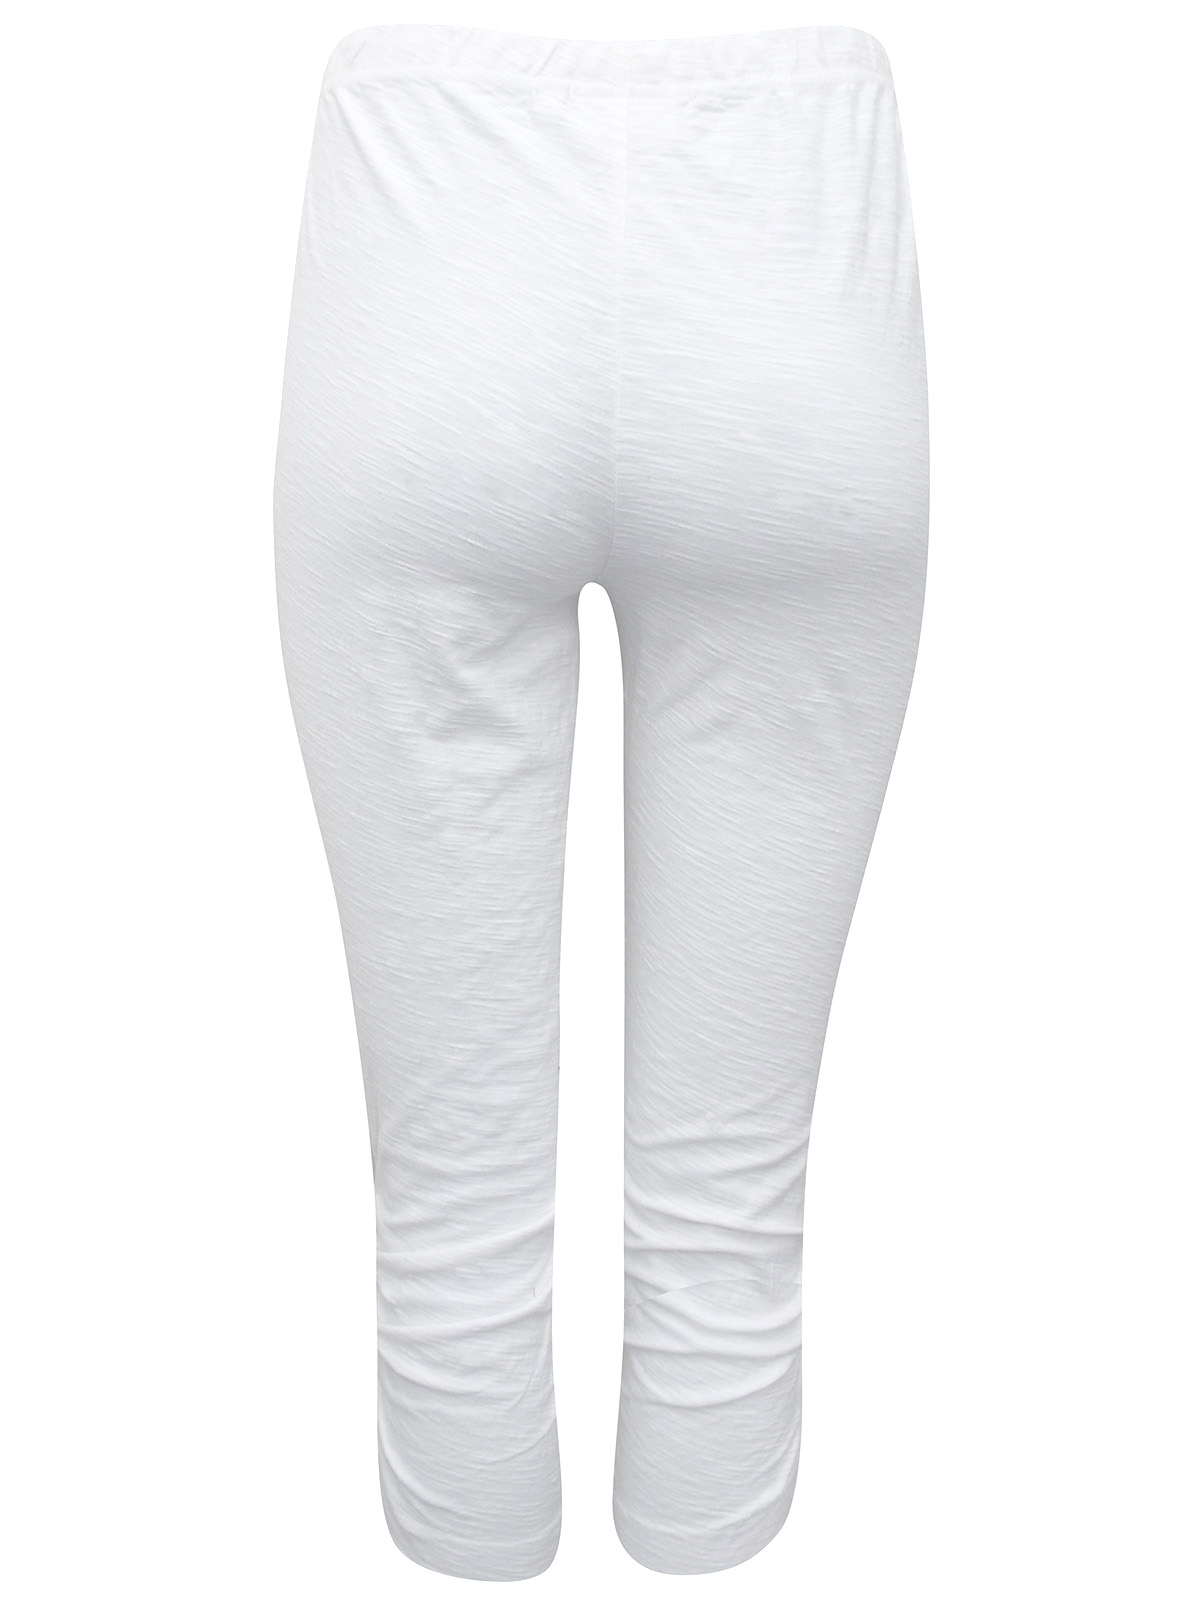 Shop Plus Size Australian Cotton Crop Legging in White | Sizes 12-30 |  Taking Shape UK